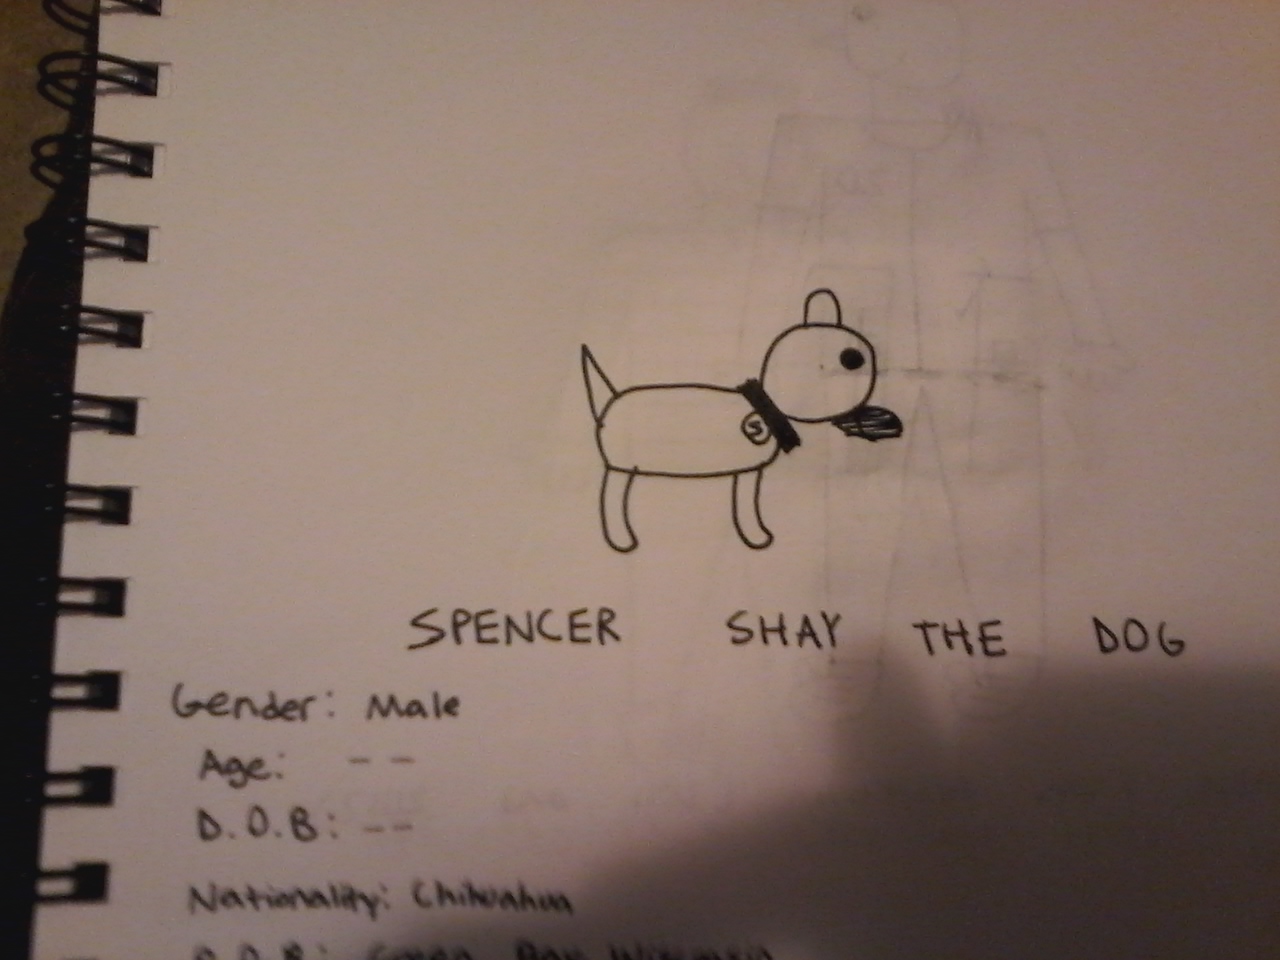 Spencer Shay (dog), Randompedia